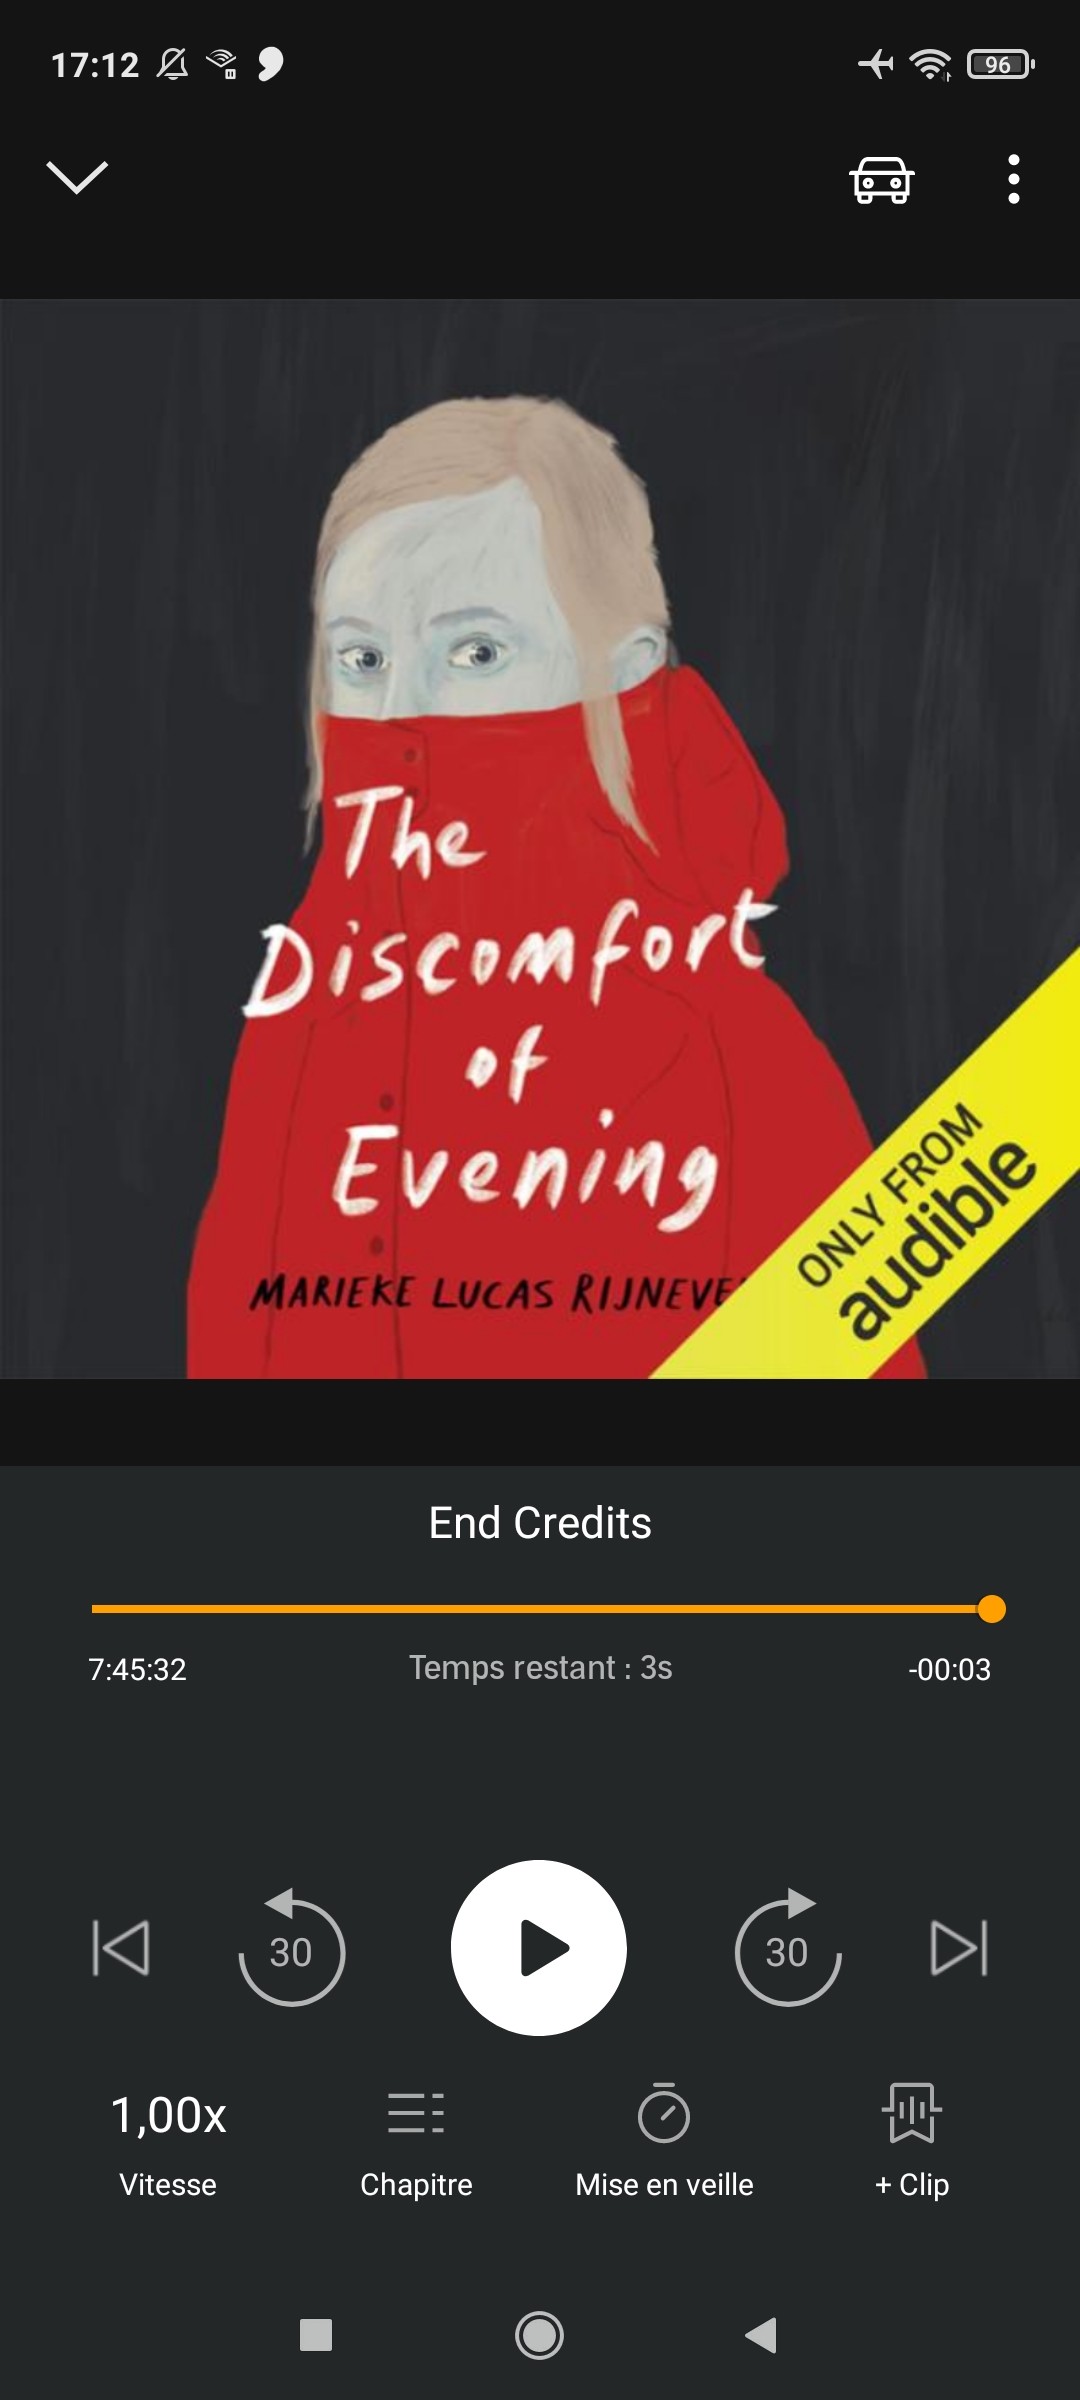 Audiobook: Genevieve Gaunt reads The Discomfort of Evening by Marieke Lucas Rijneveld